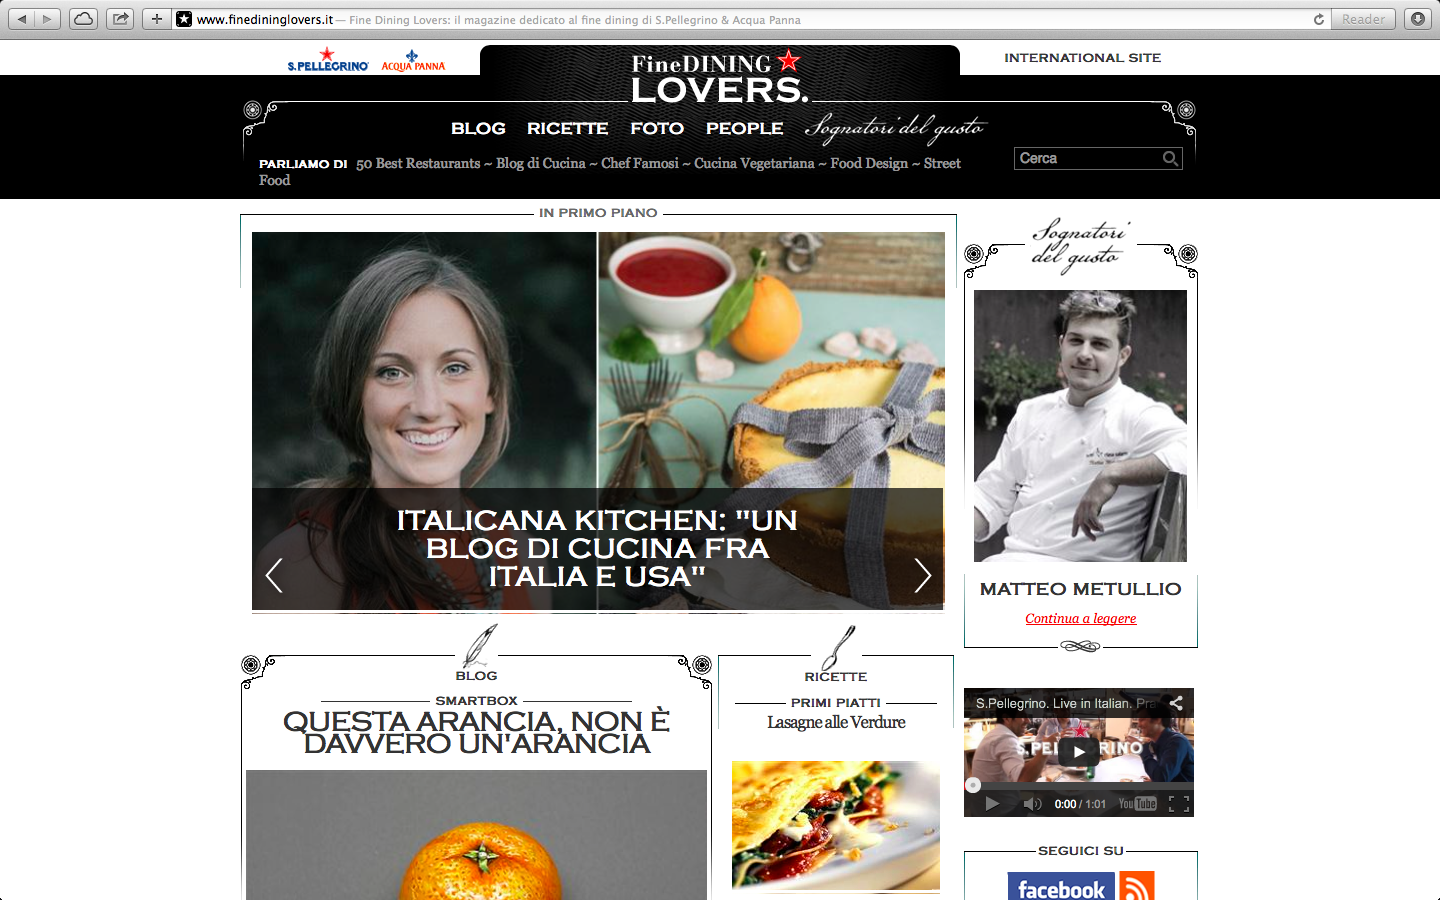 italicana kitchen blog on Fine Dining Lovers magazine